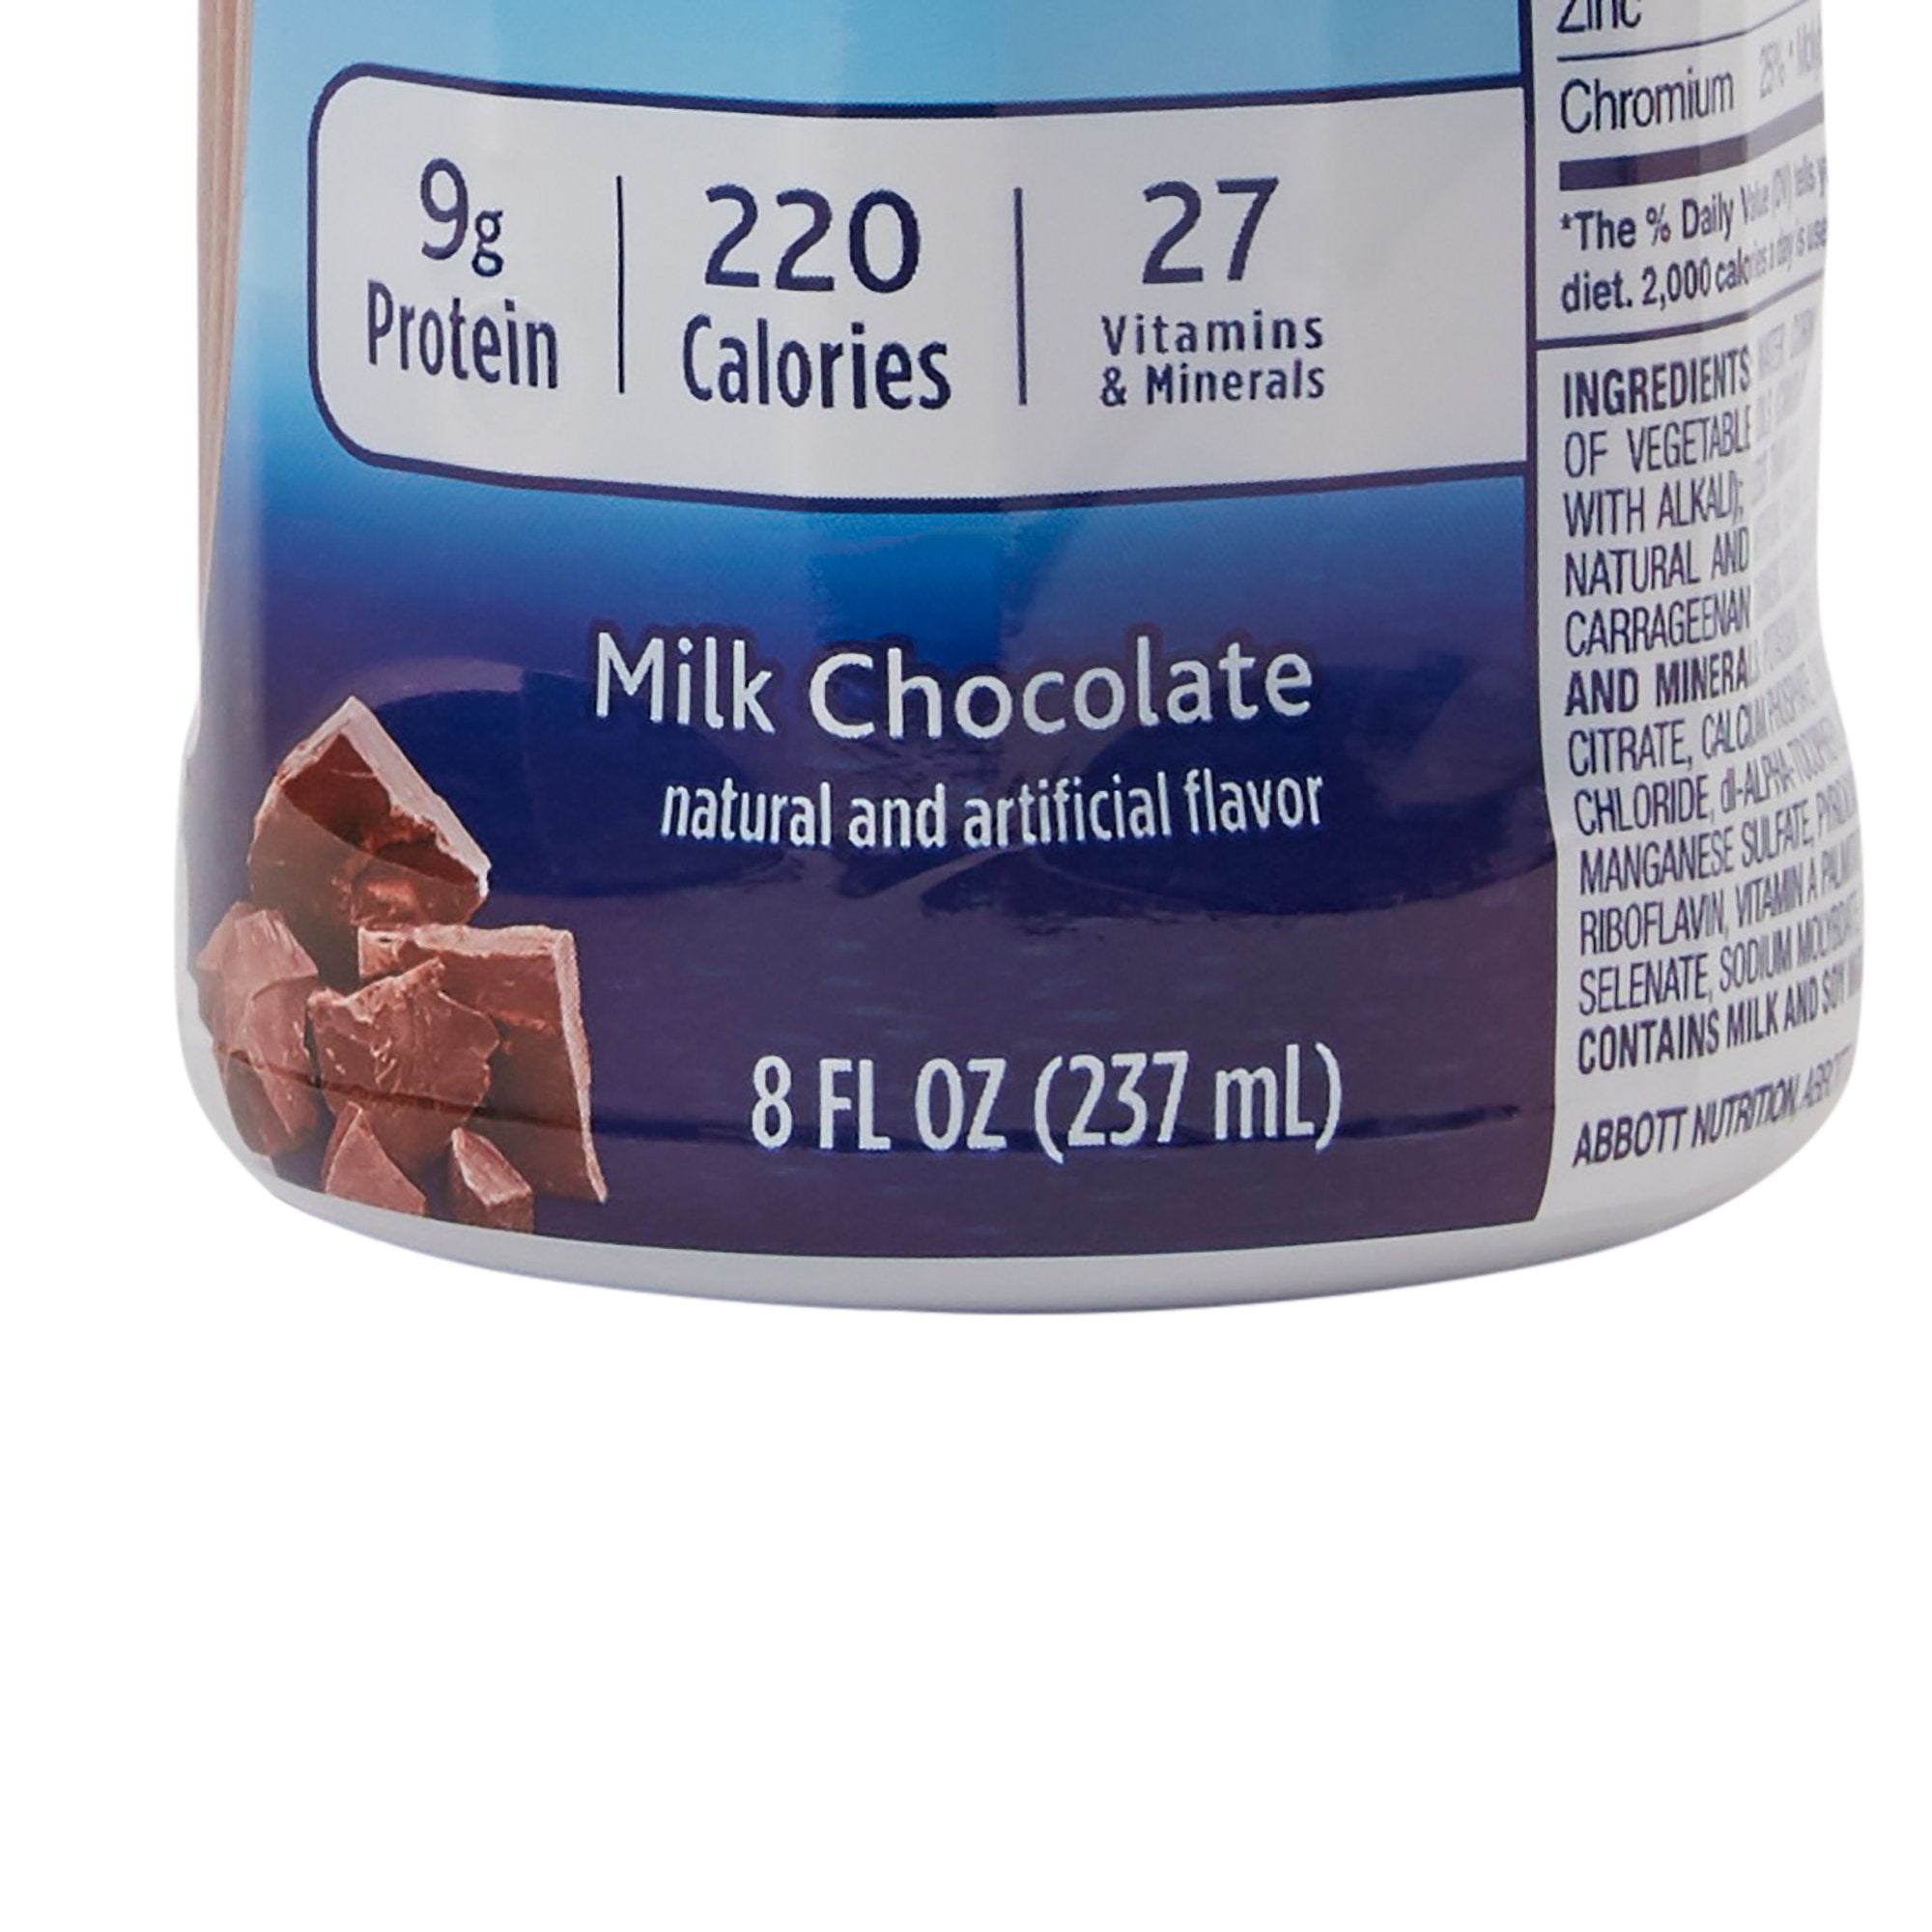 Oral Supplement Ensure Original Shake Milk Chocolate Flavor Liquid 8 oz. Bottle